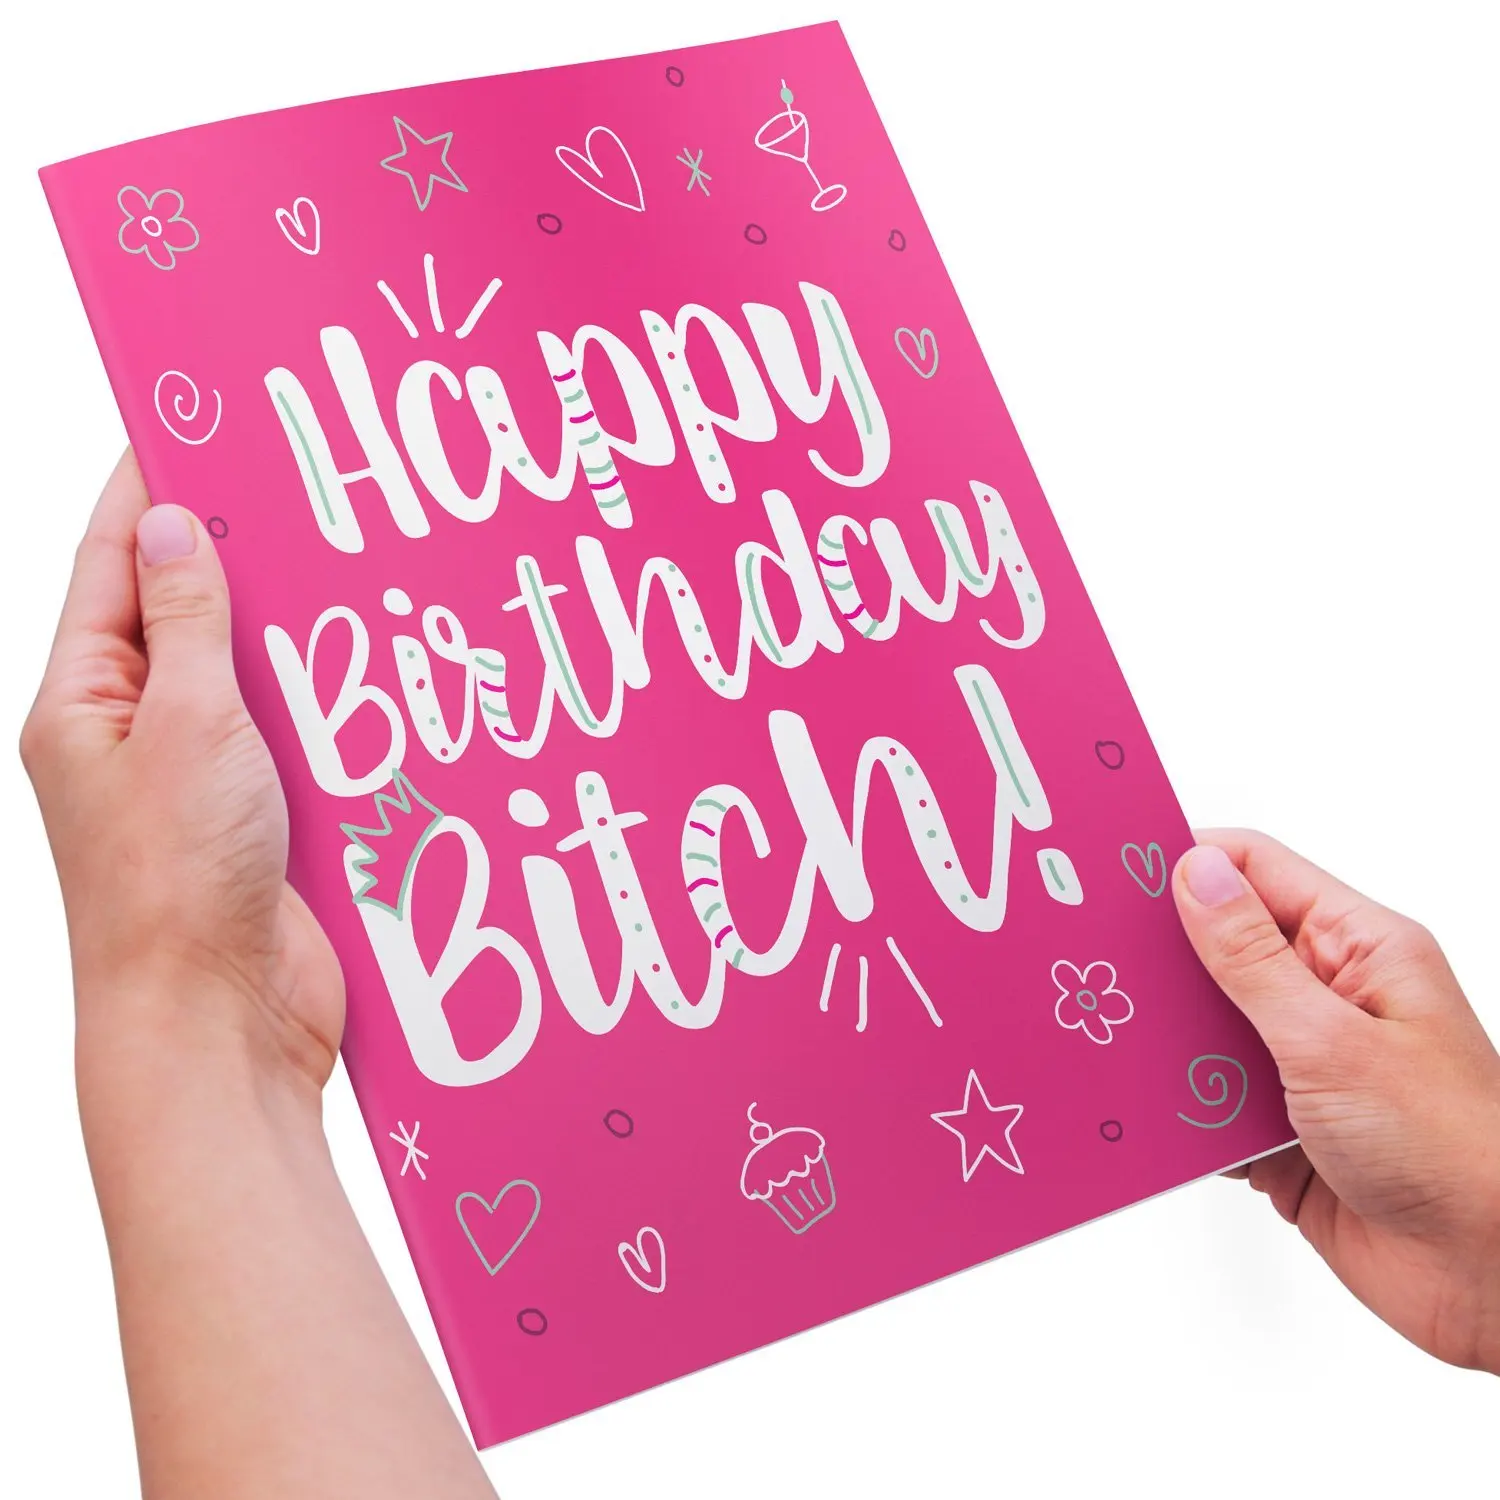 Adult Humor - Funny Birthday Card - XL Size - Happy Birthday Bitch.